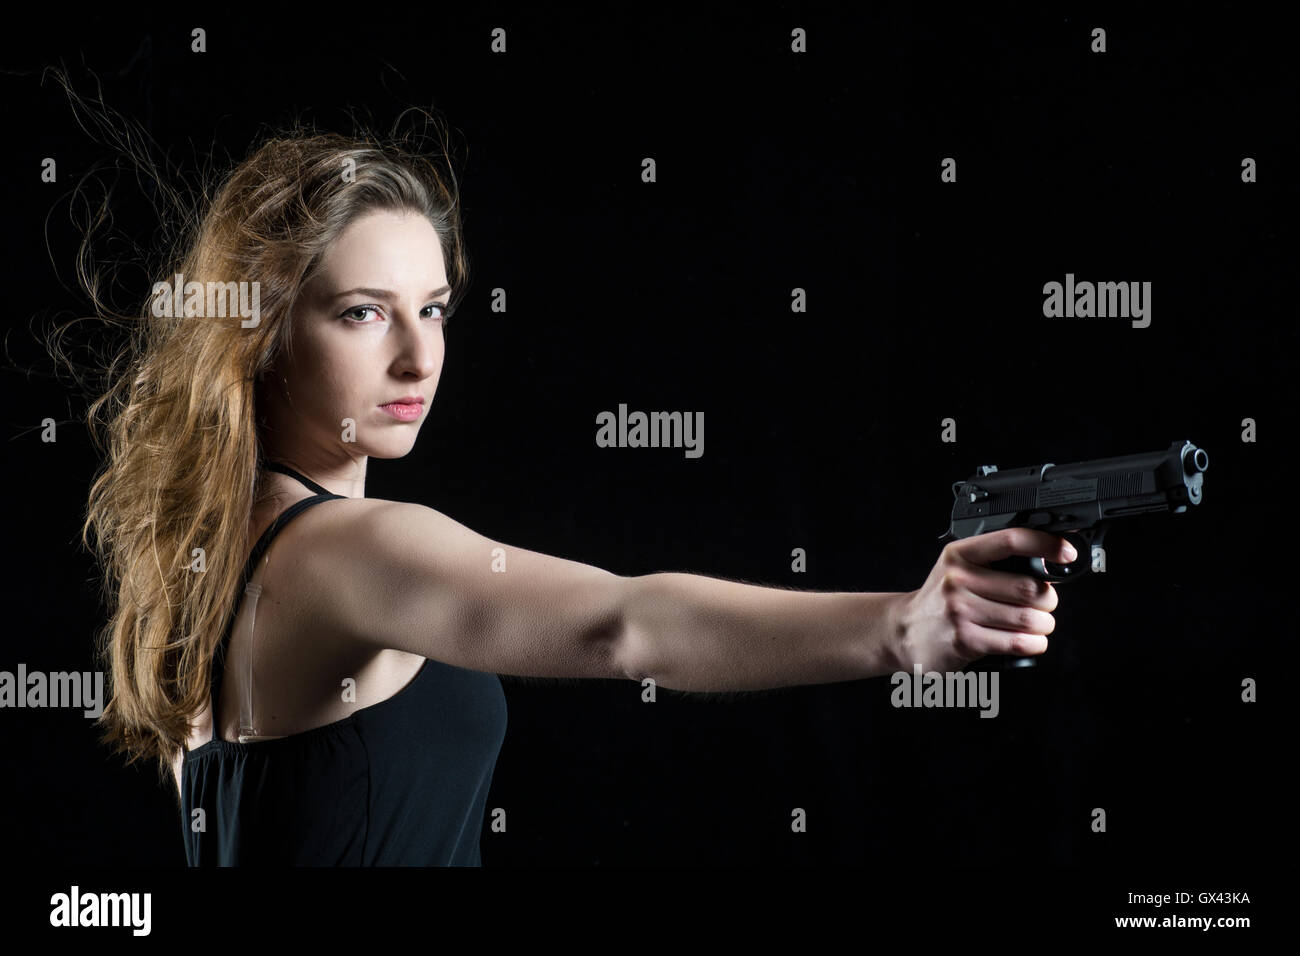 Serious woman aiming a gun Stock Photo